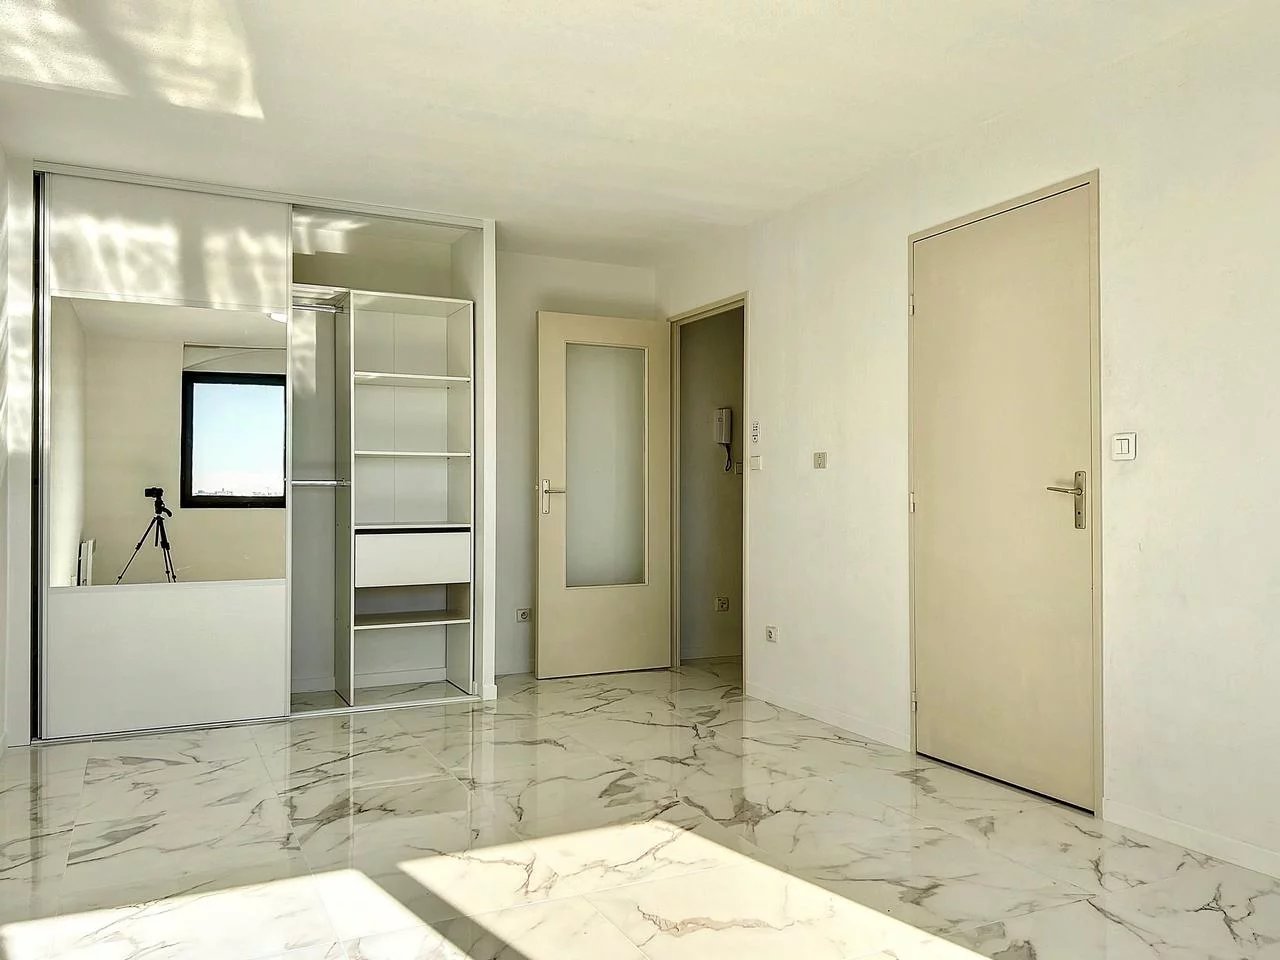 Appartement  1 Locali 28.83m2  In vendita   208 000 €